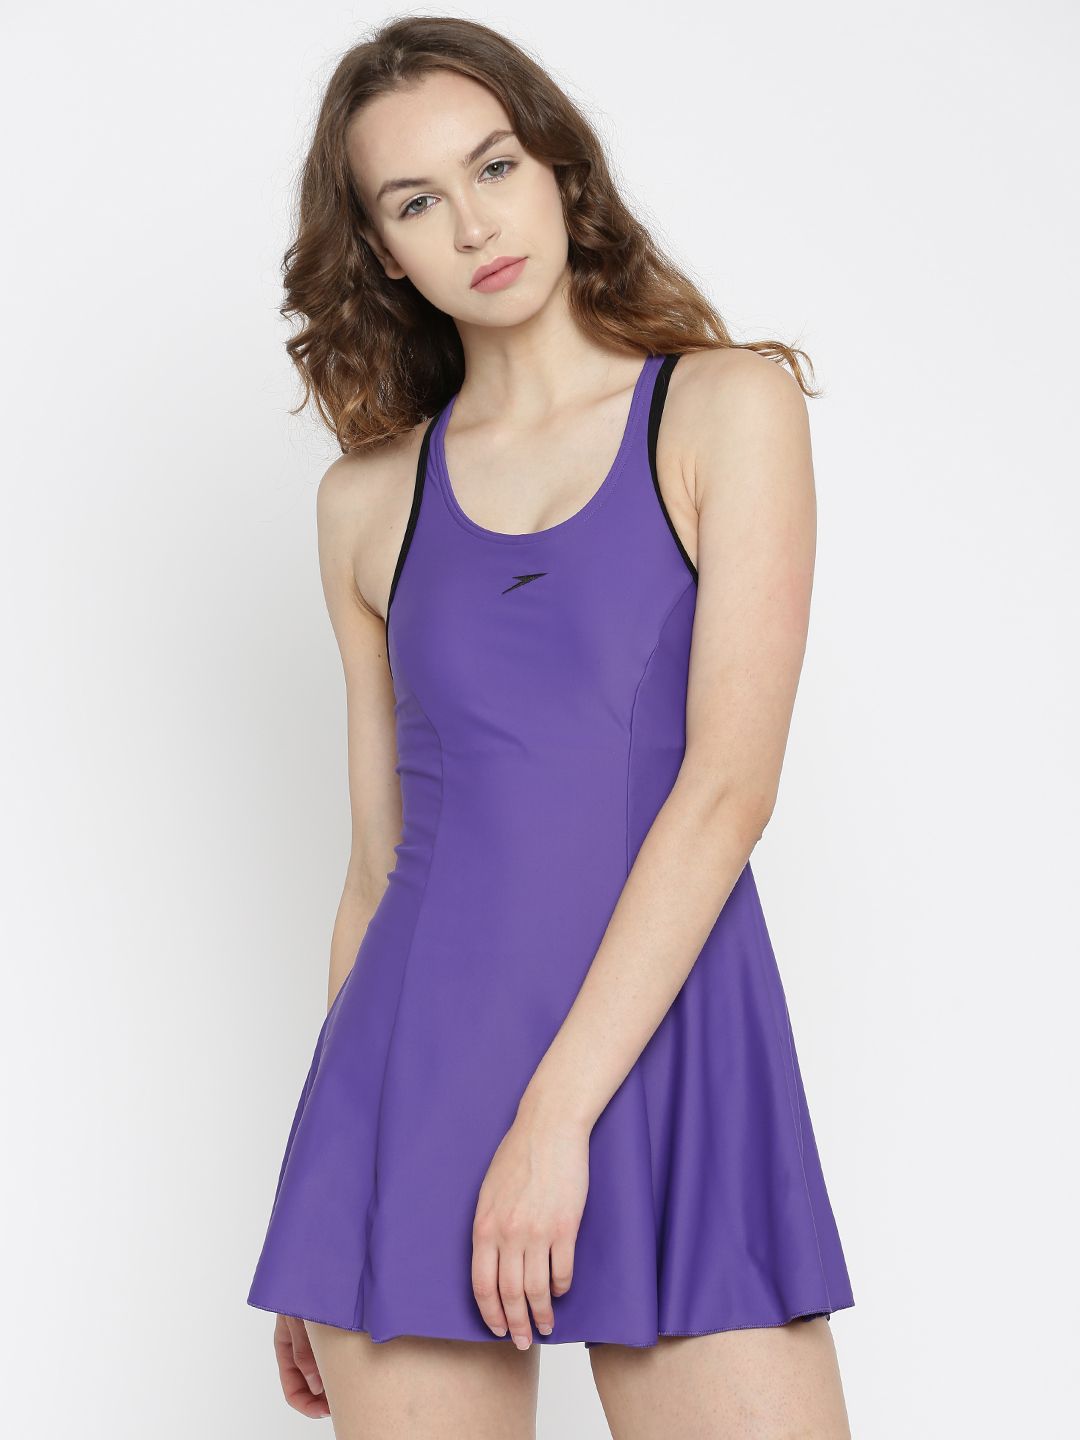 Speedo Purple Swim Dress 802878P015 Price in India